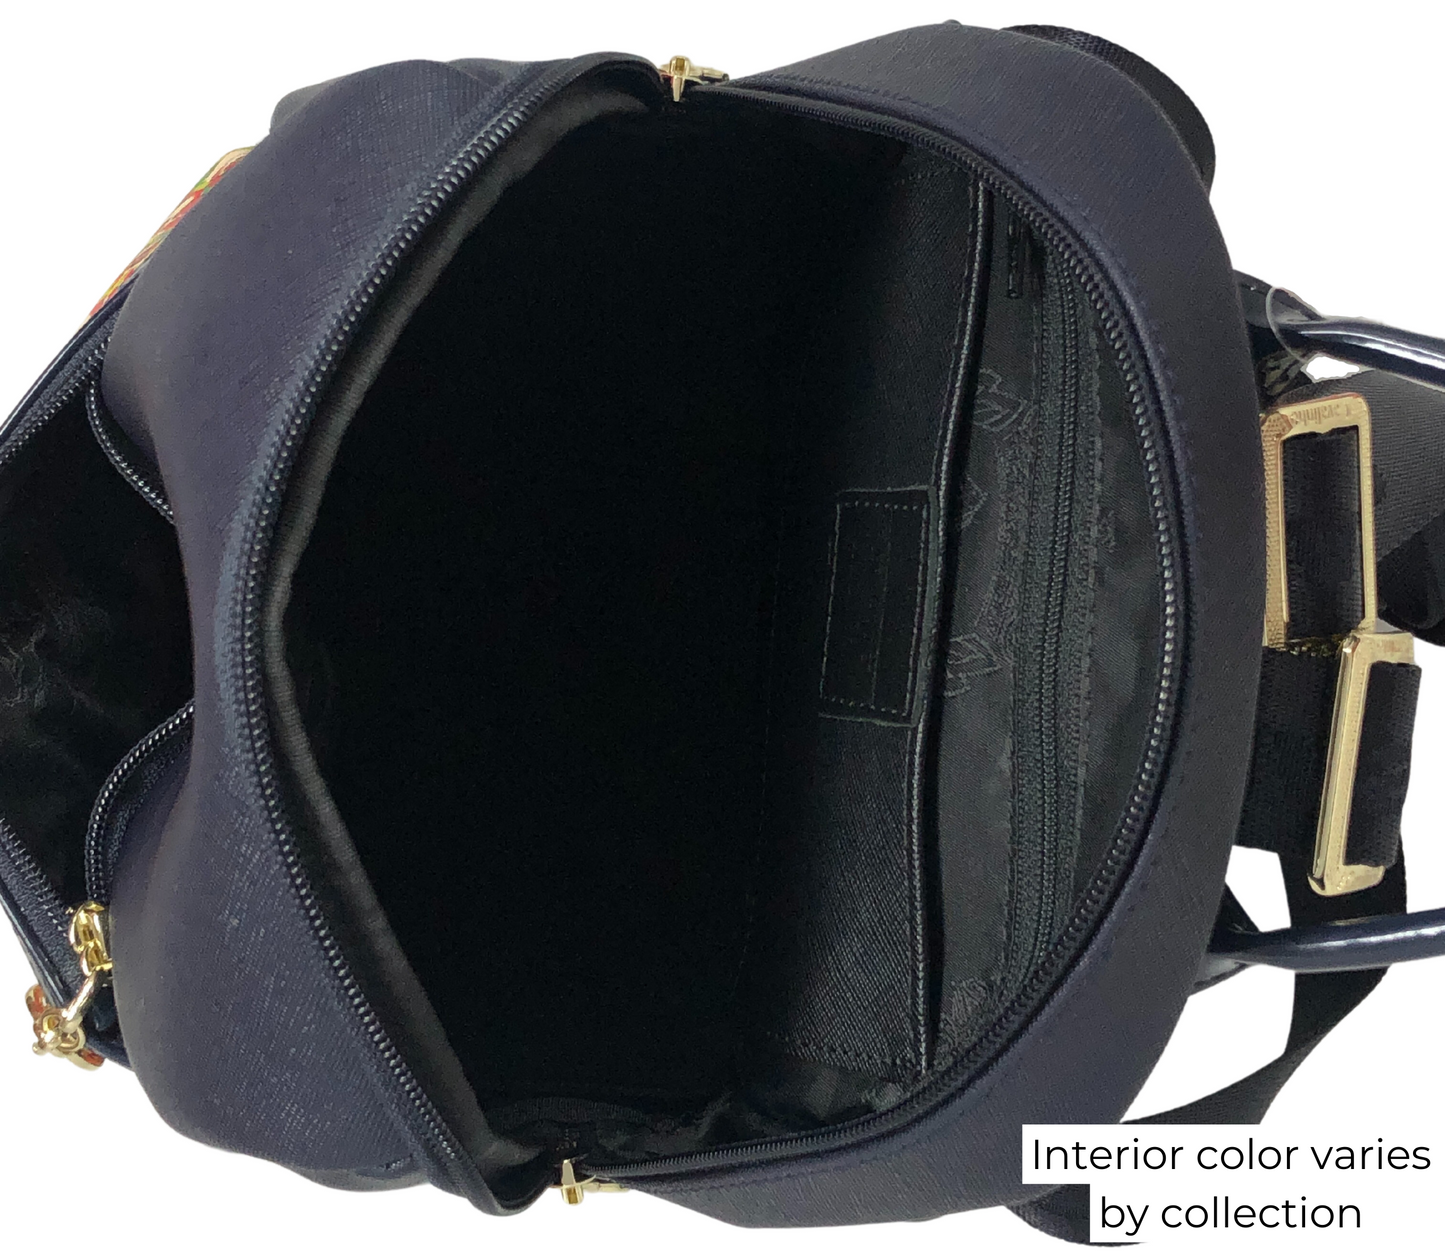 Cavalinho Ciao Bella Backpack - SaddleBrown Multi-Color - 18060249.34-Interior0249.03